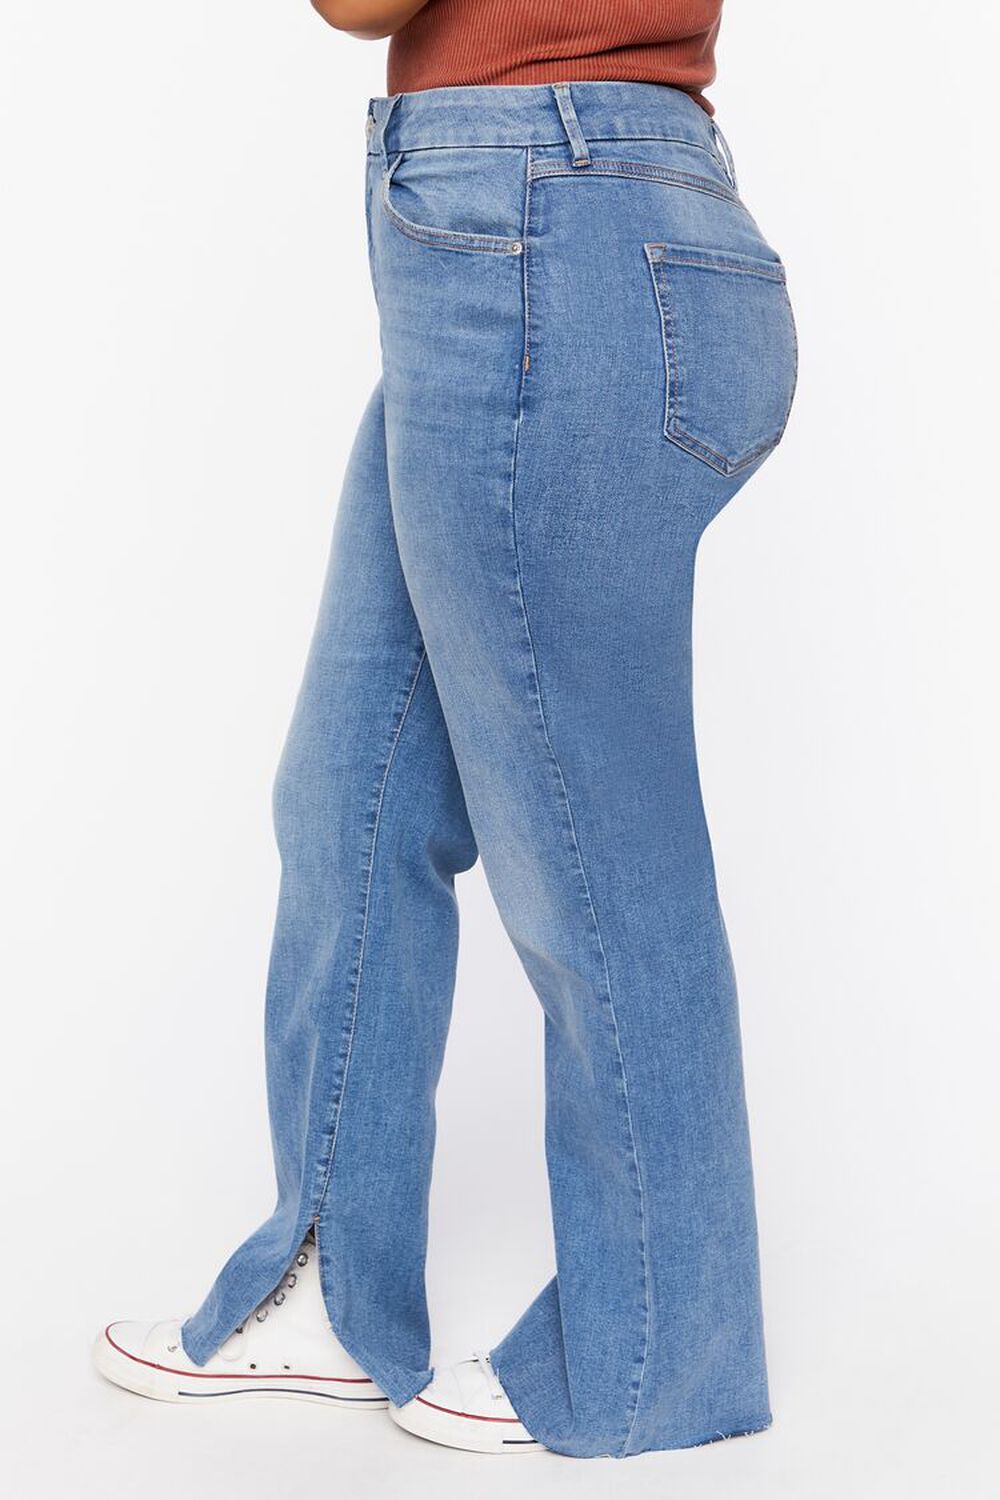 LIGHT DENIM Plus Size High-Rise Bootcut Jeans, image 3